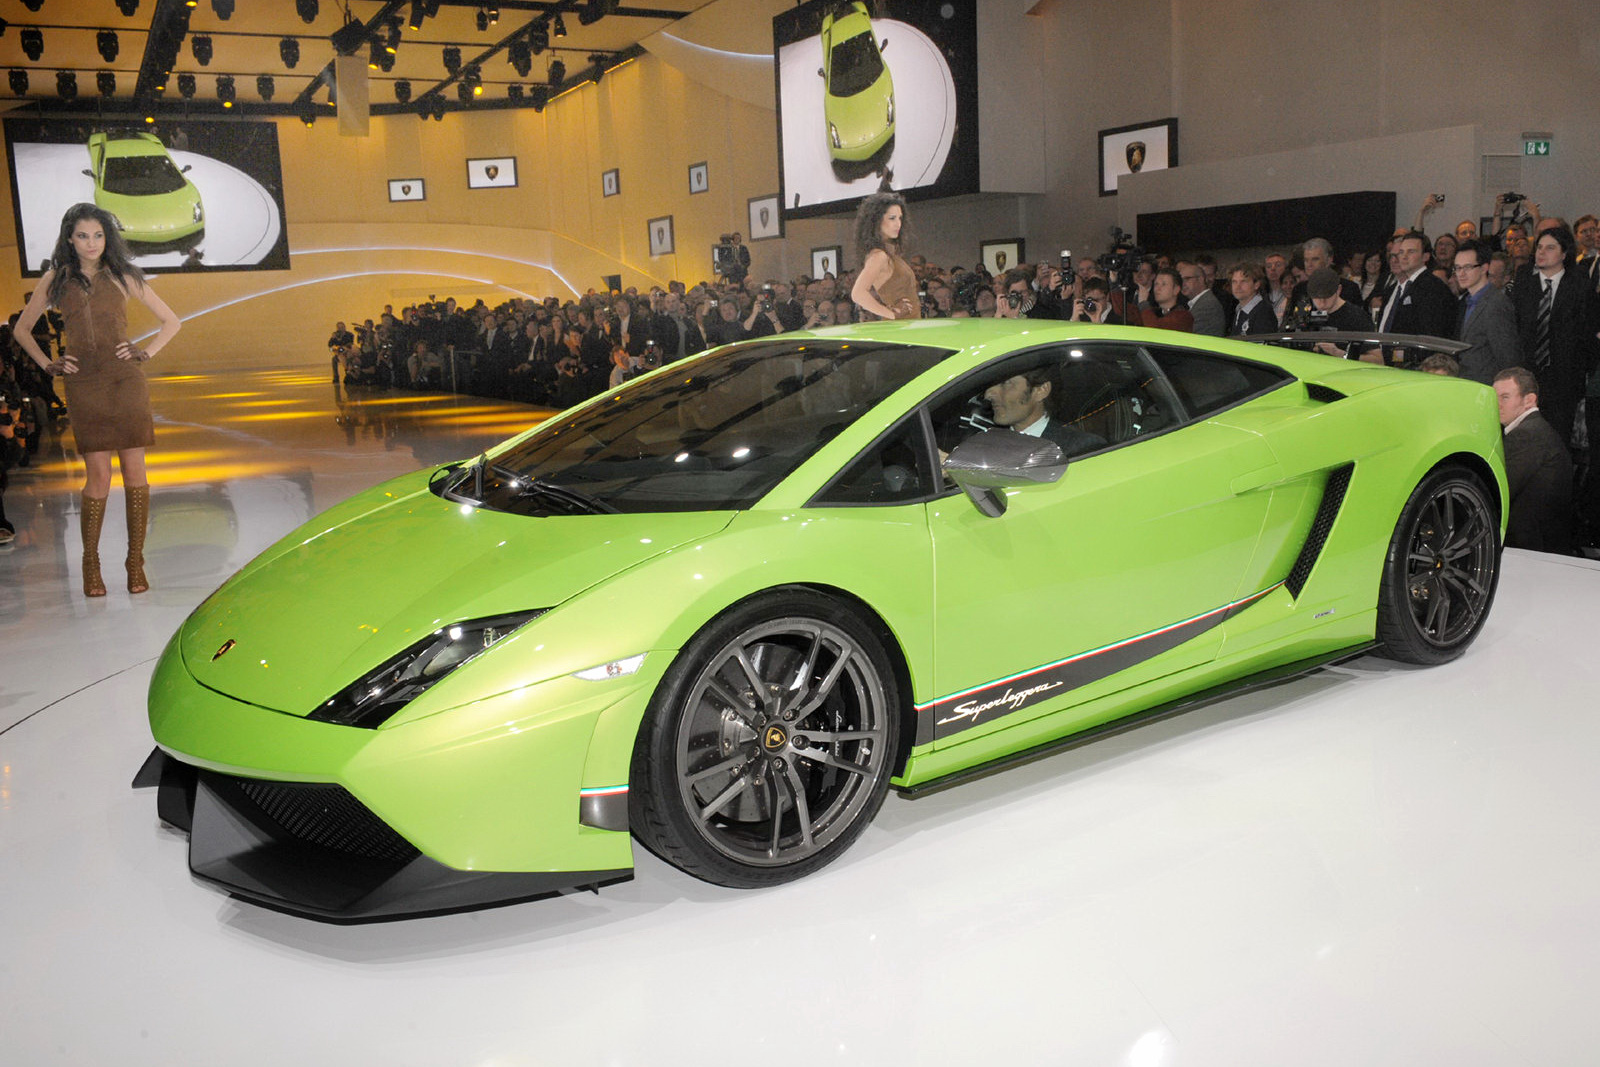 http://www.automotorblog.com/wp-content/uploads/2011/04/Lamborghini-Gallardo-2.jpg